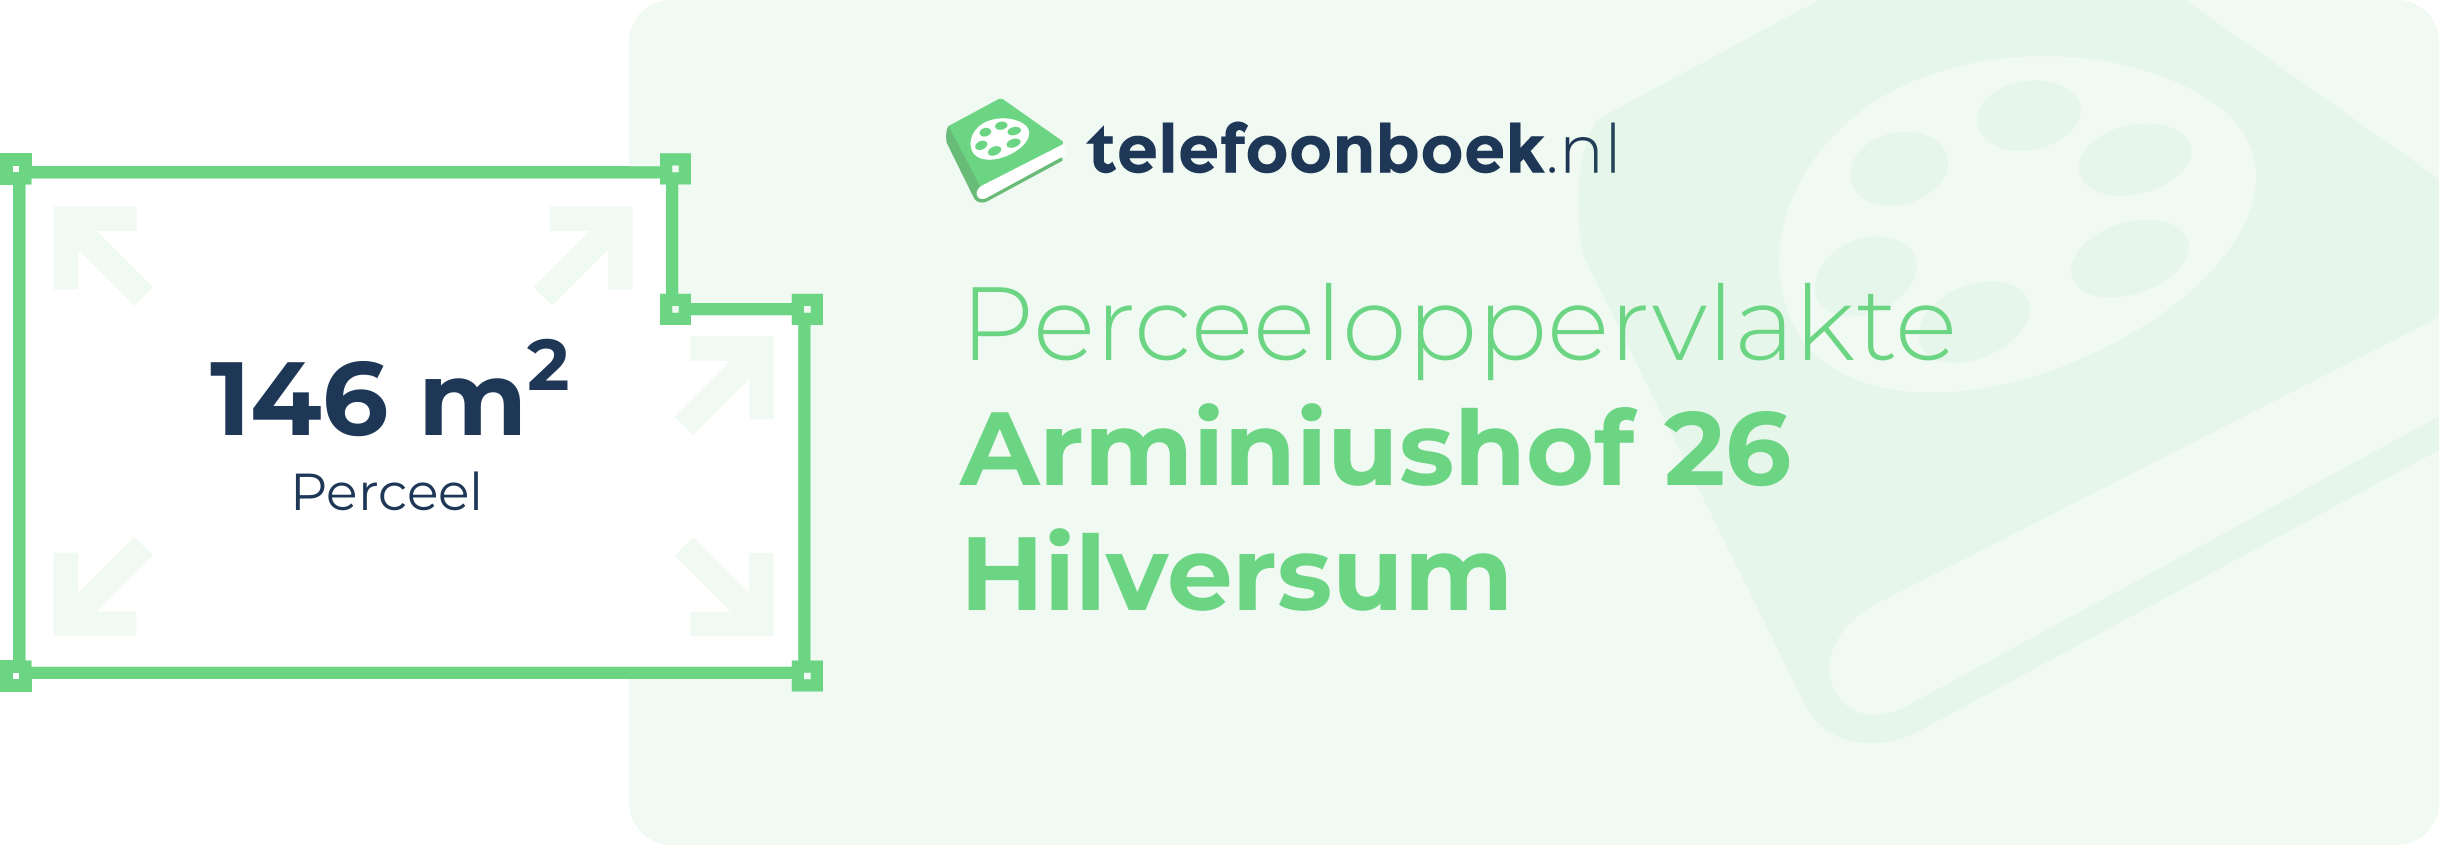 Perceeloppervlakte Arminiushof 26 Hilversum